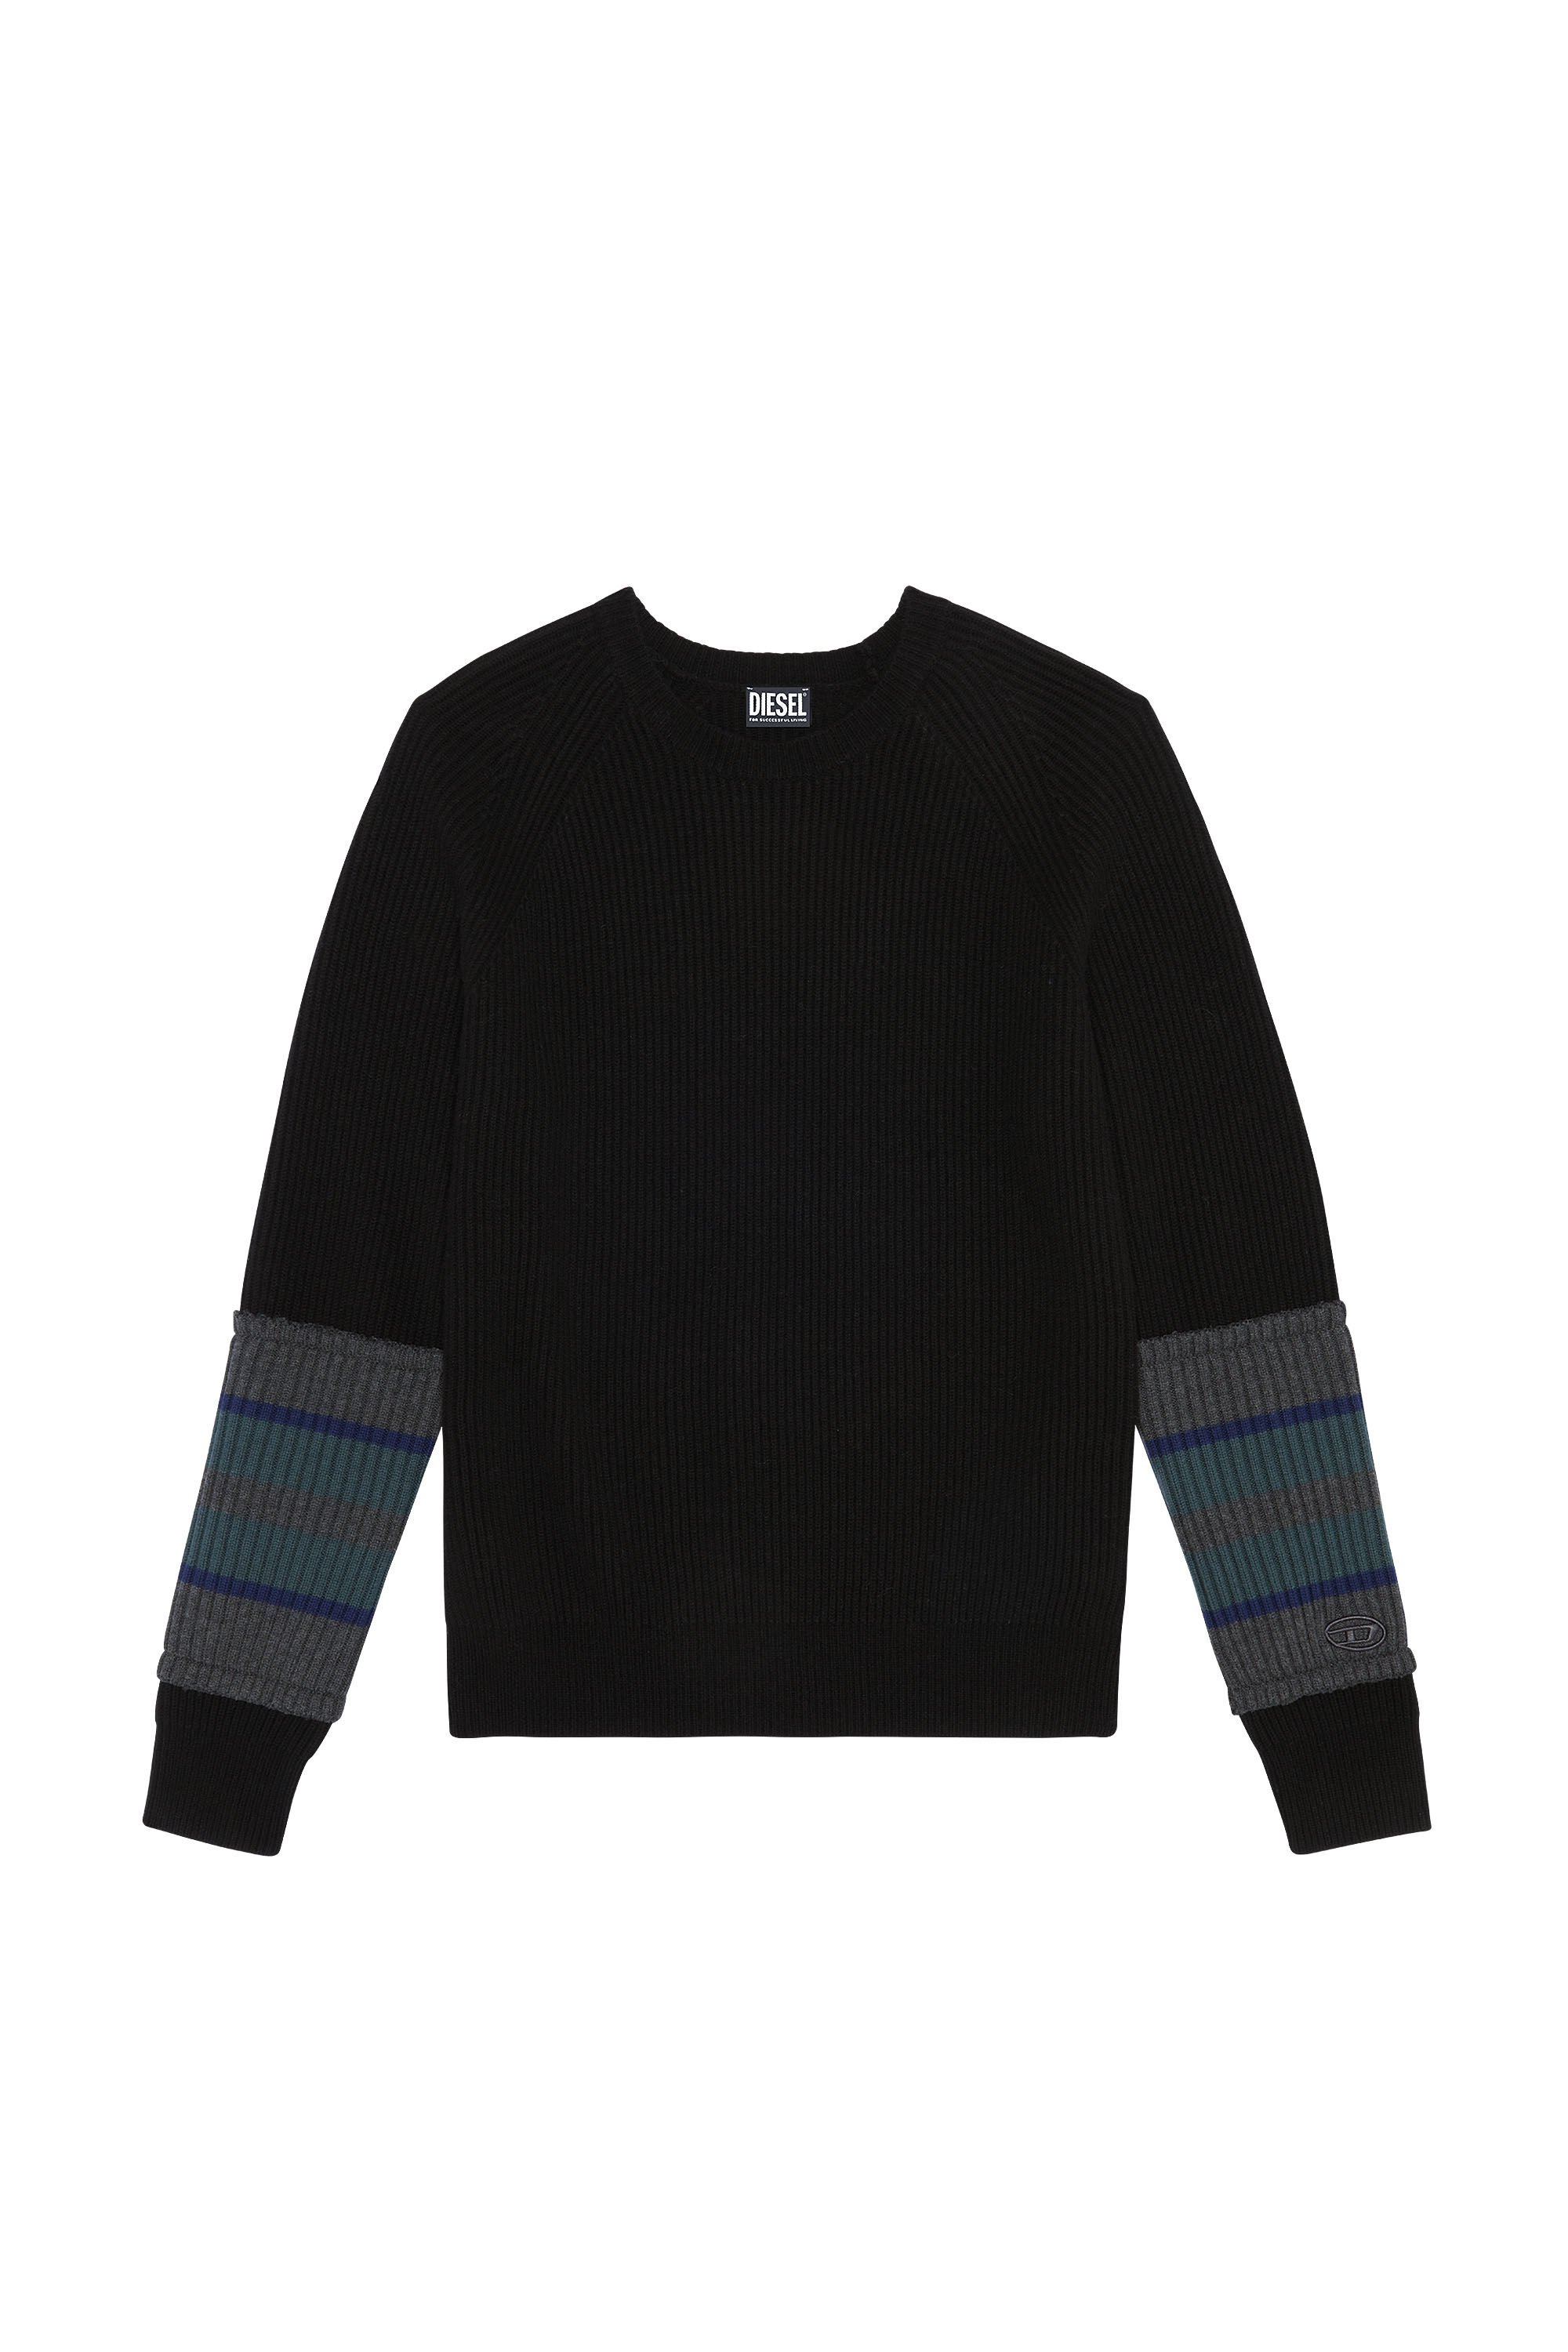 K-LIFF Man: Wool jumper with striped overlays | Diesel